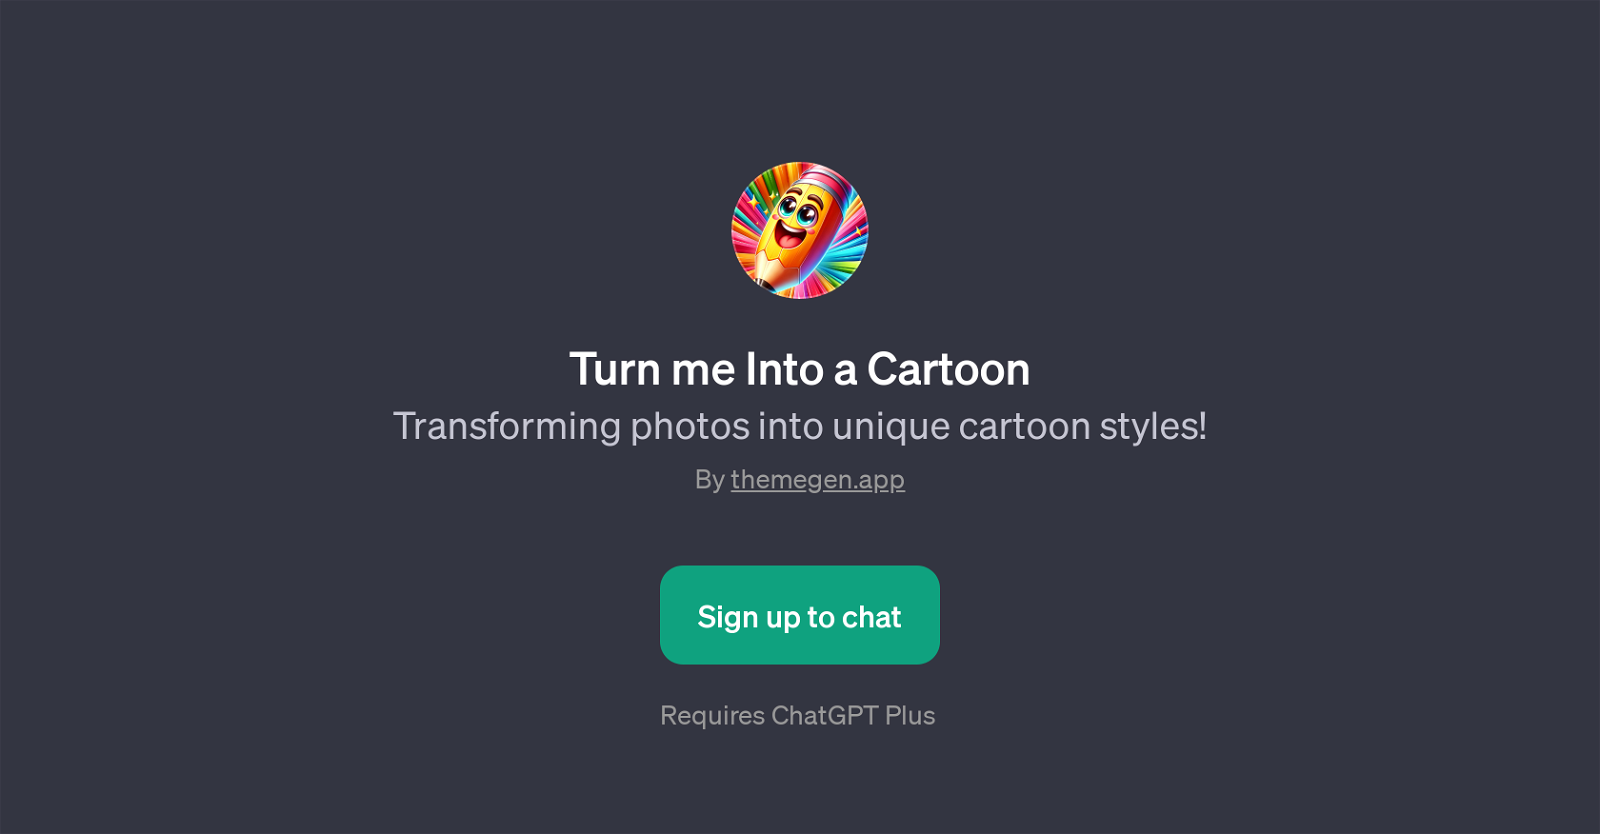 Turn me Into a Cartoon website